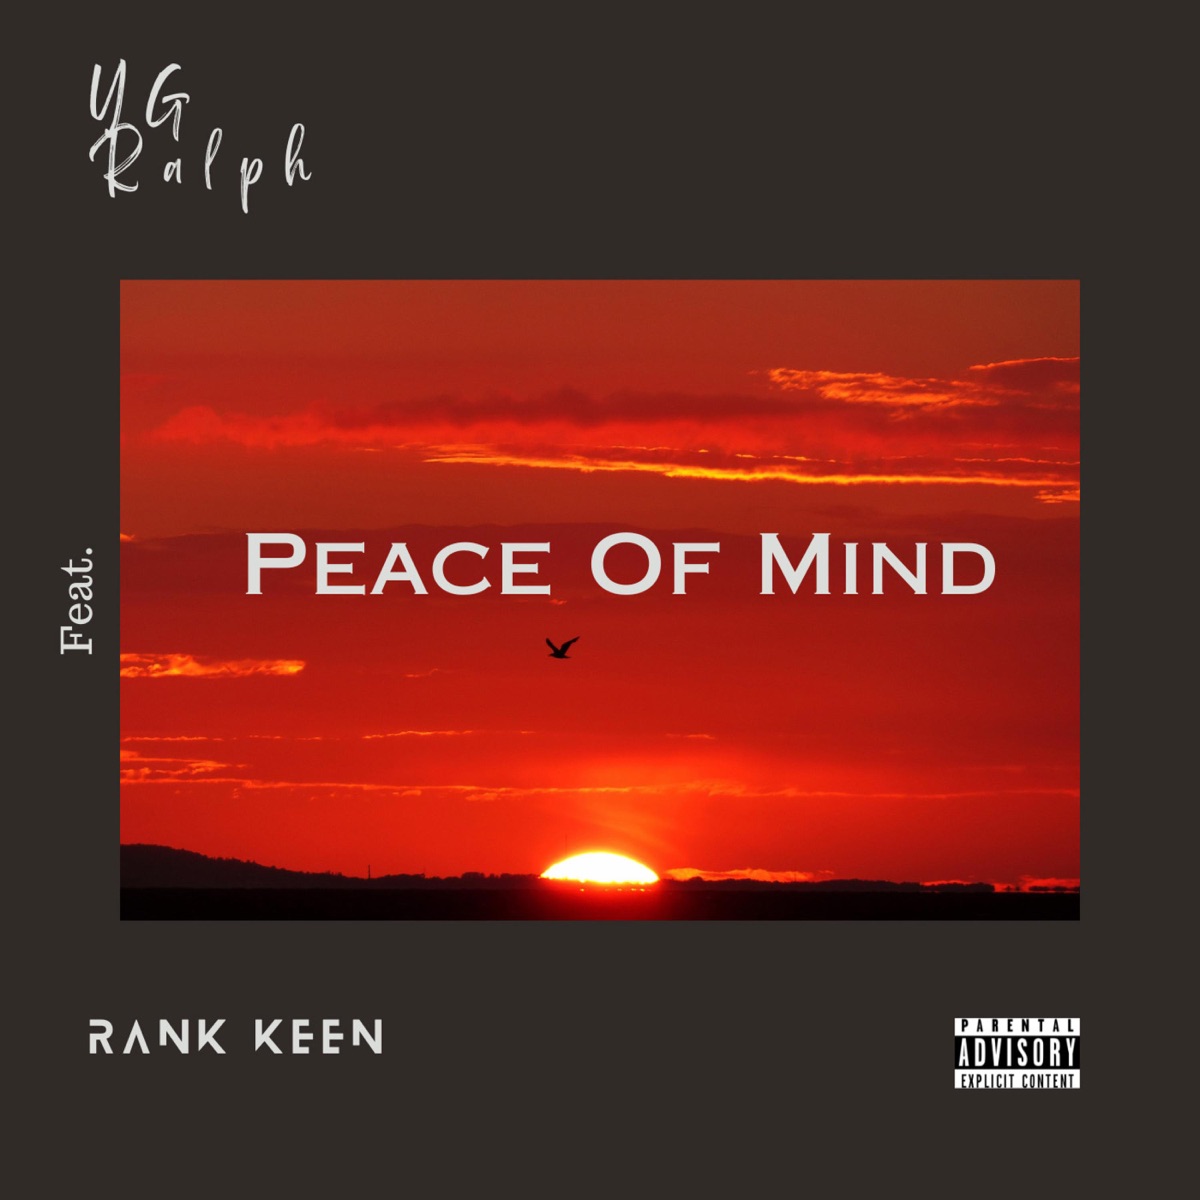 Peace of Mind (feat. Rank Keen) - Single - Album by YG Ralph - Apple Music